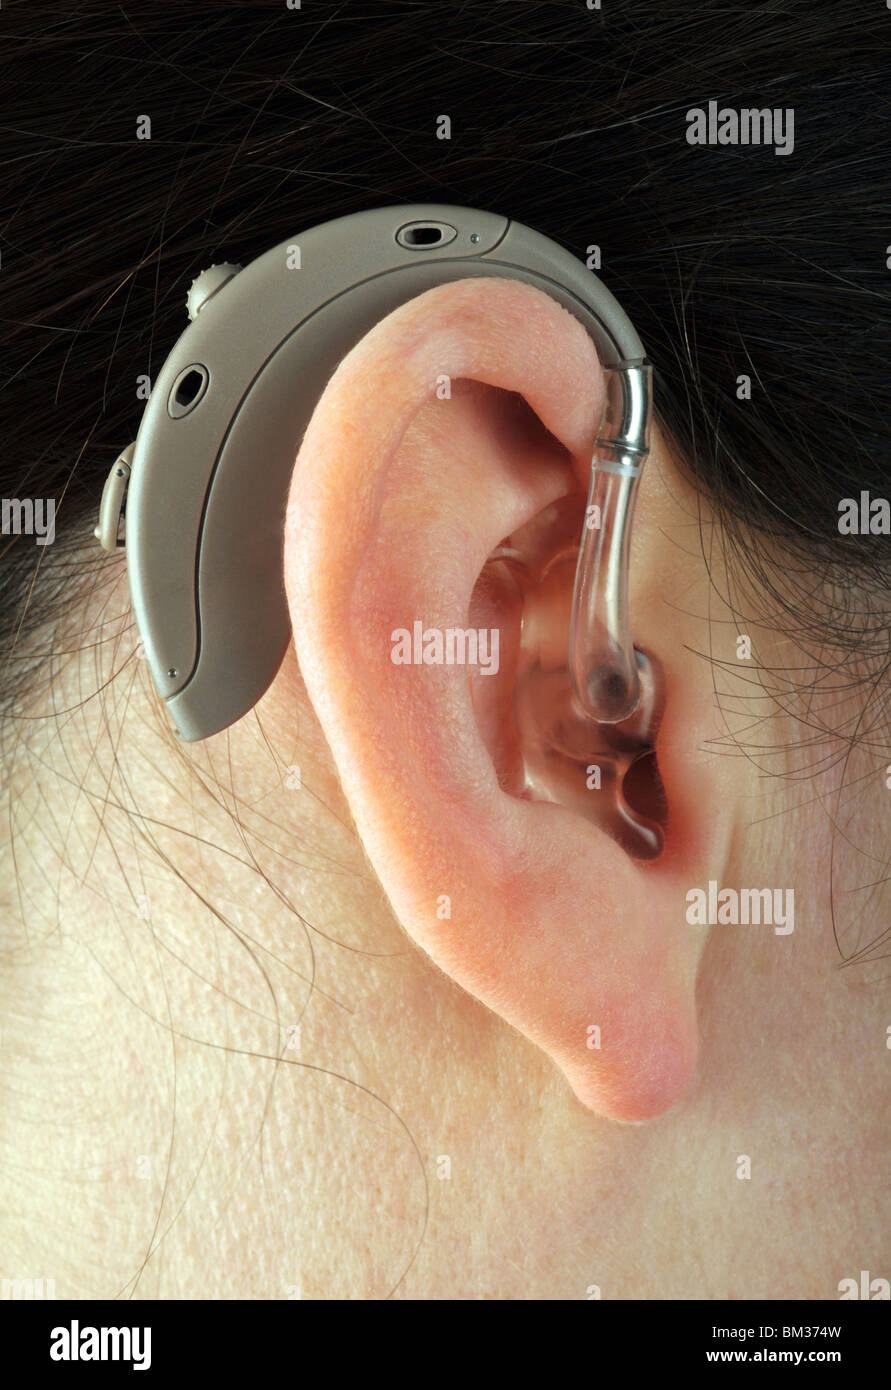 Digitales Hörgerät, Hörgerät eine Frau ins Ohr Stockfoto